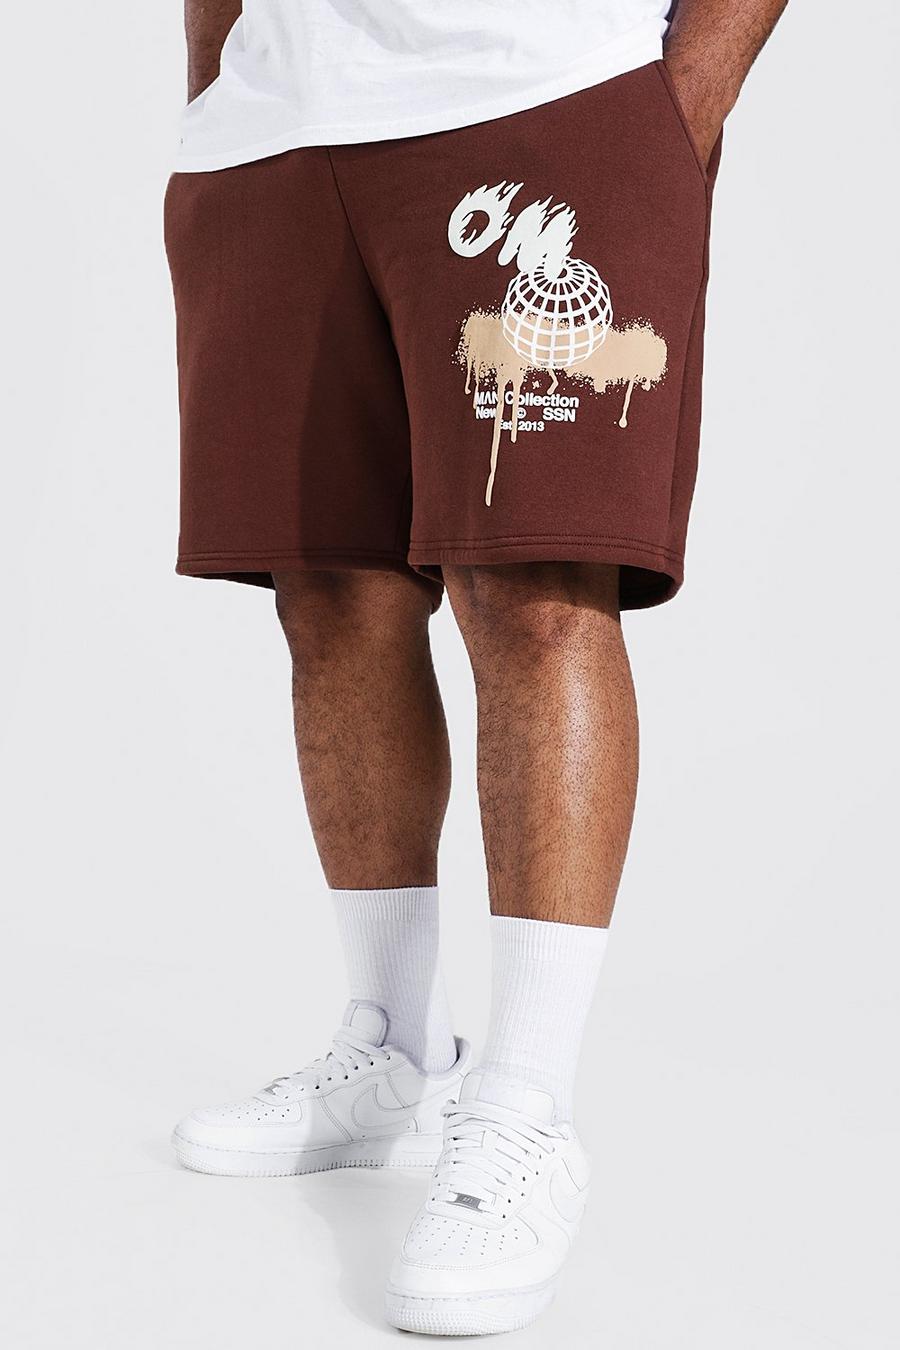 Pantalones cortos Plus de tela jersey con grafiti, Chocolate image number 1